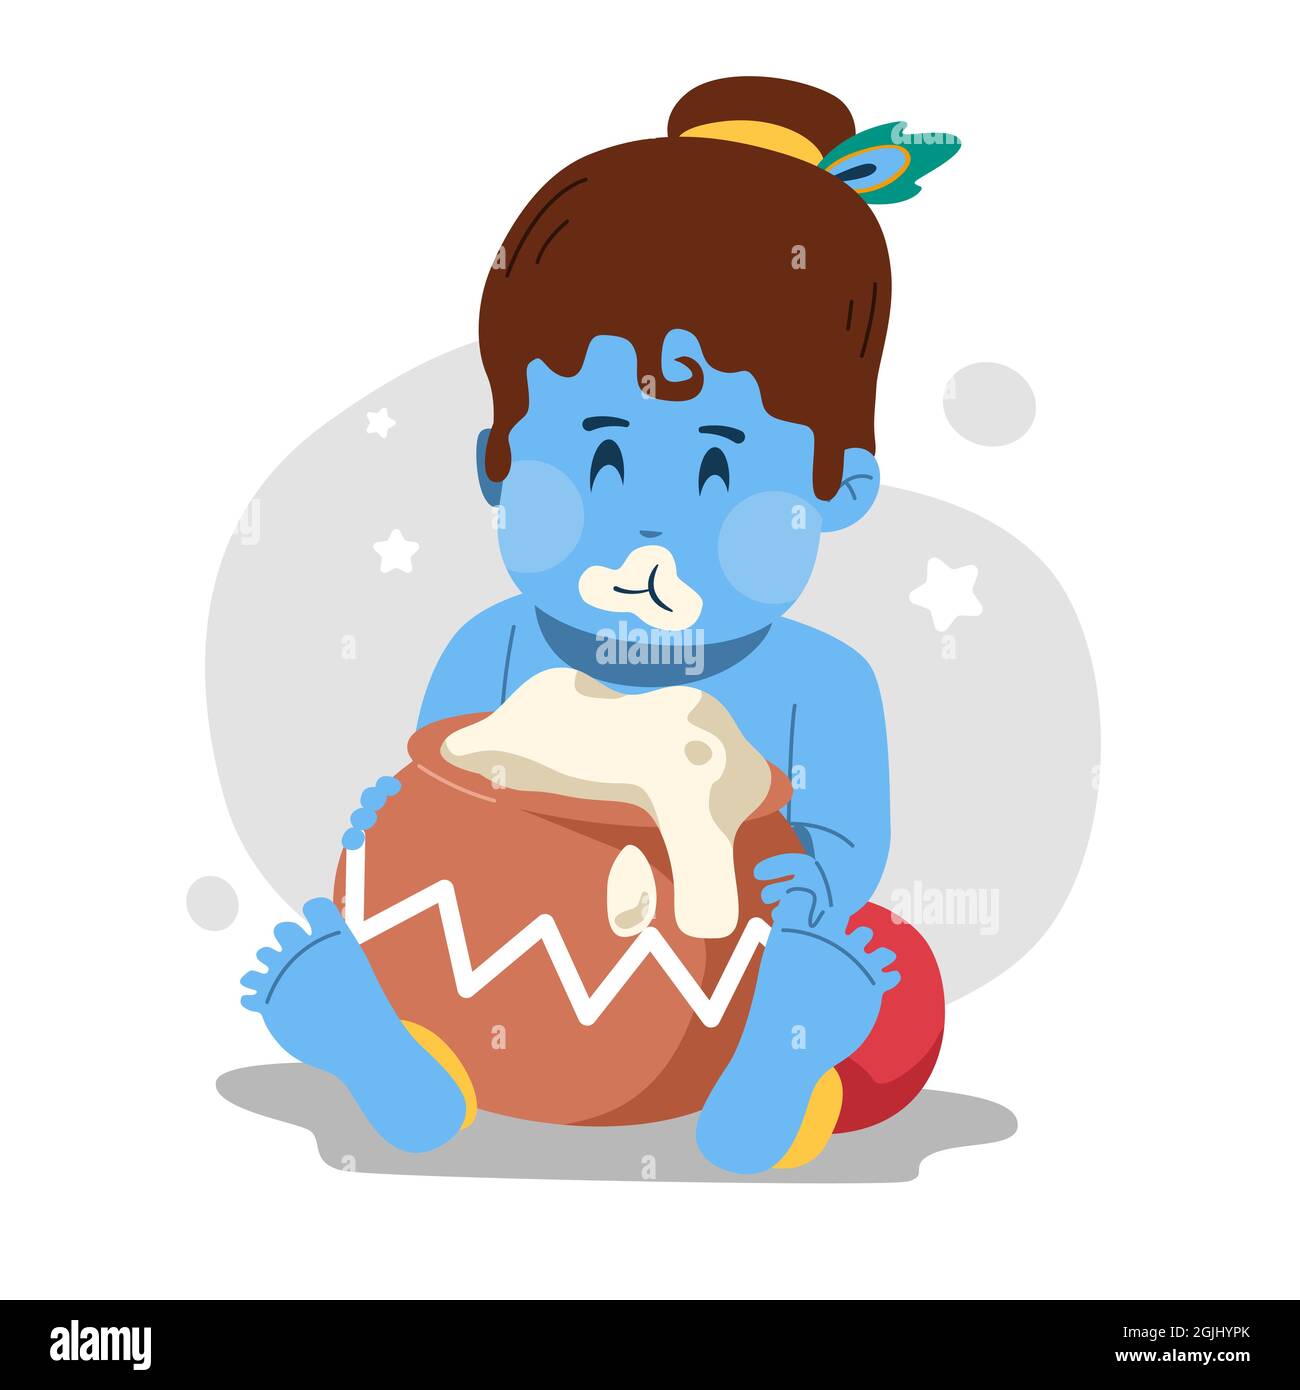 Illustration of baby krishna eating butter Vector illustration. Stock Vector